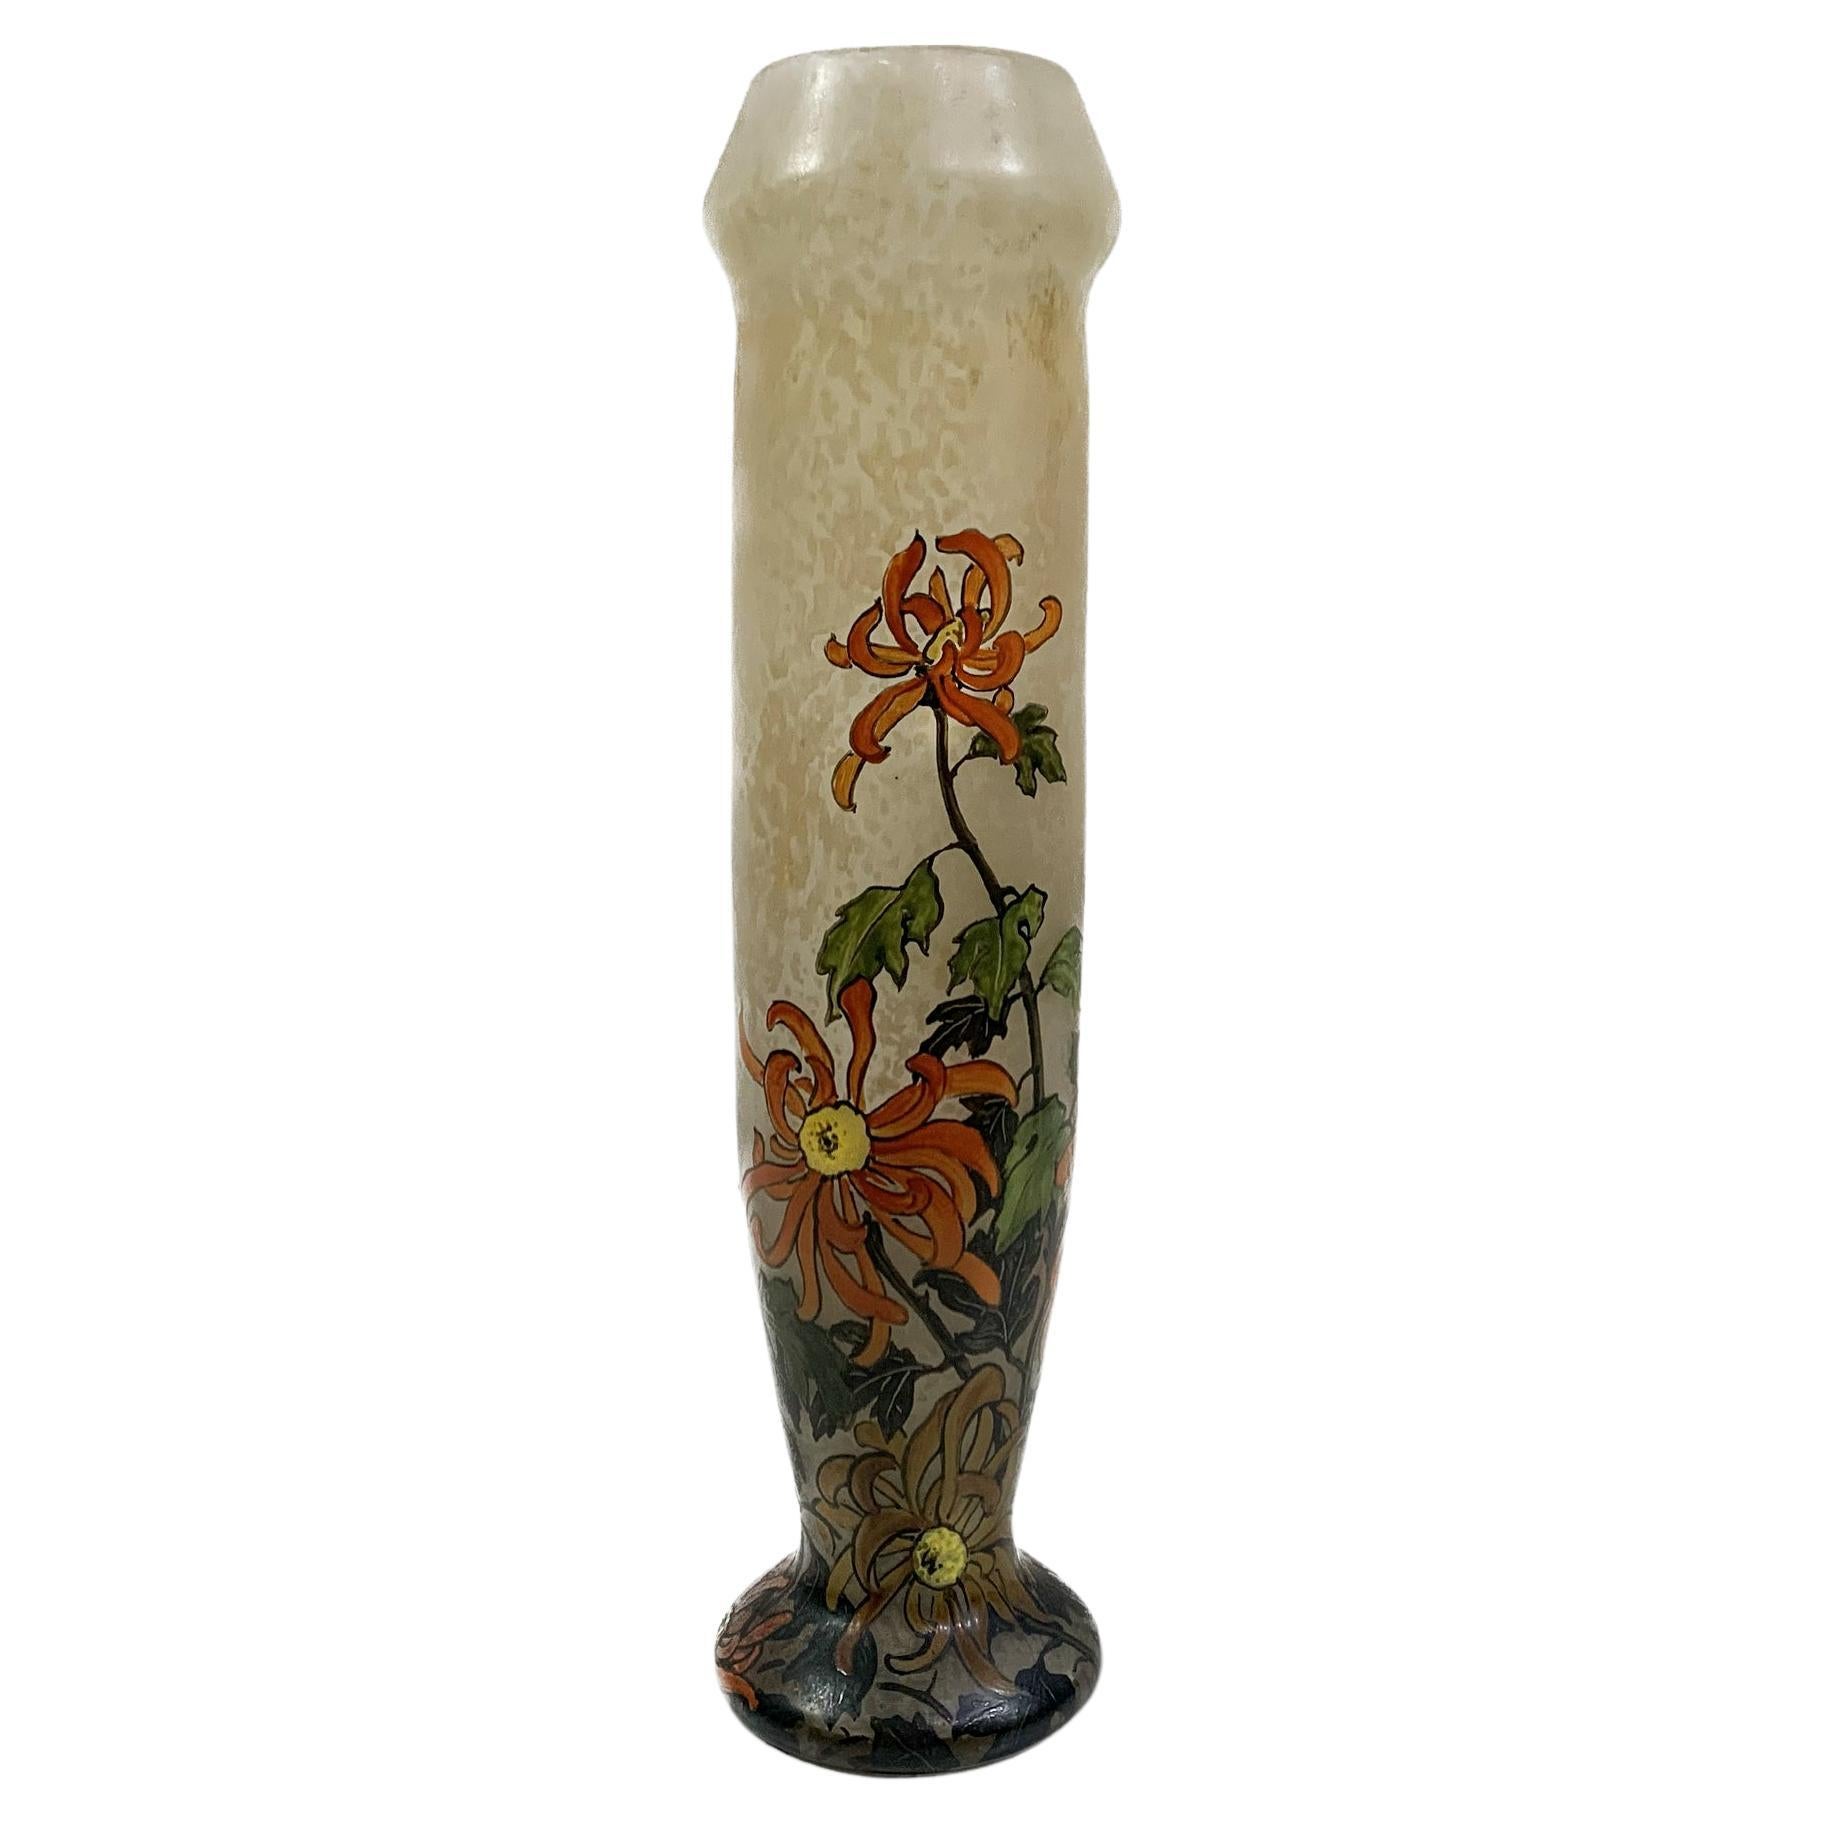  Art Nouveau enameled Flower Vase Signed "Legras" 